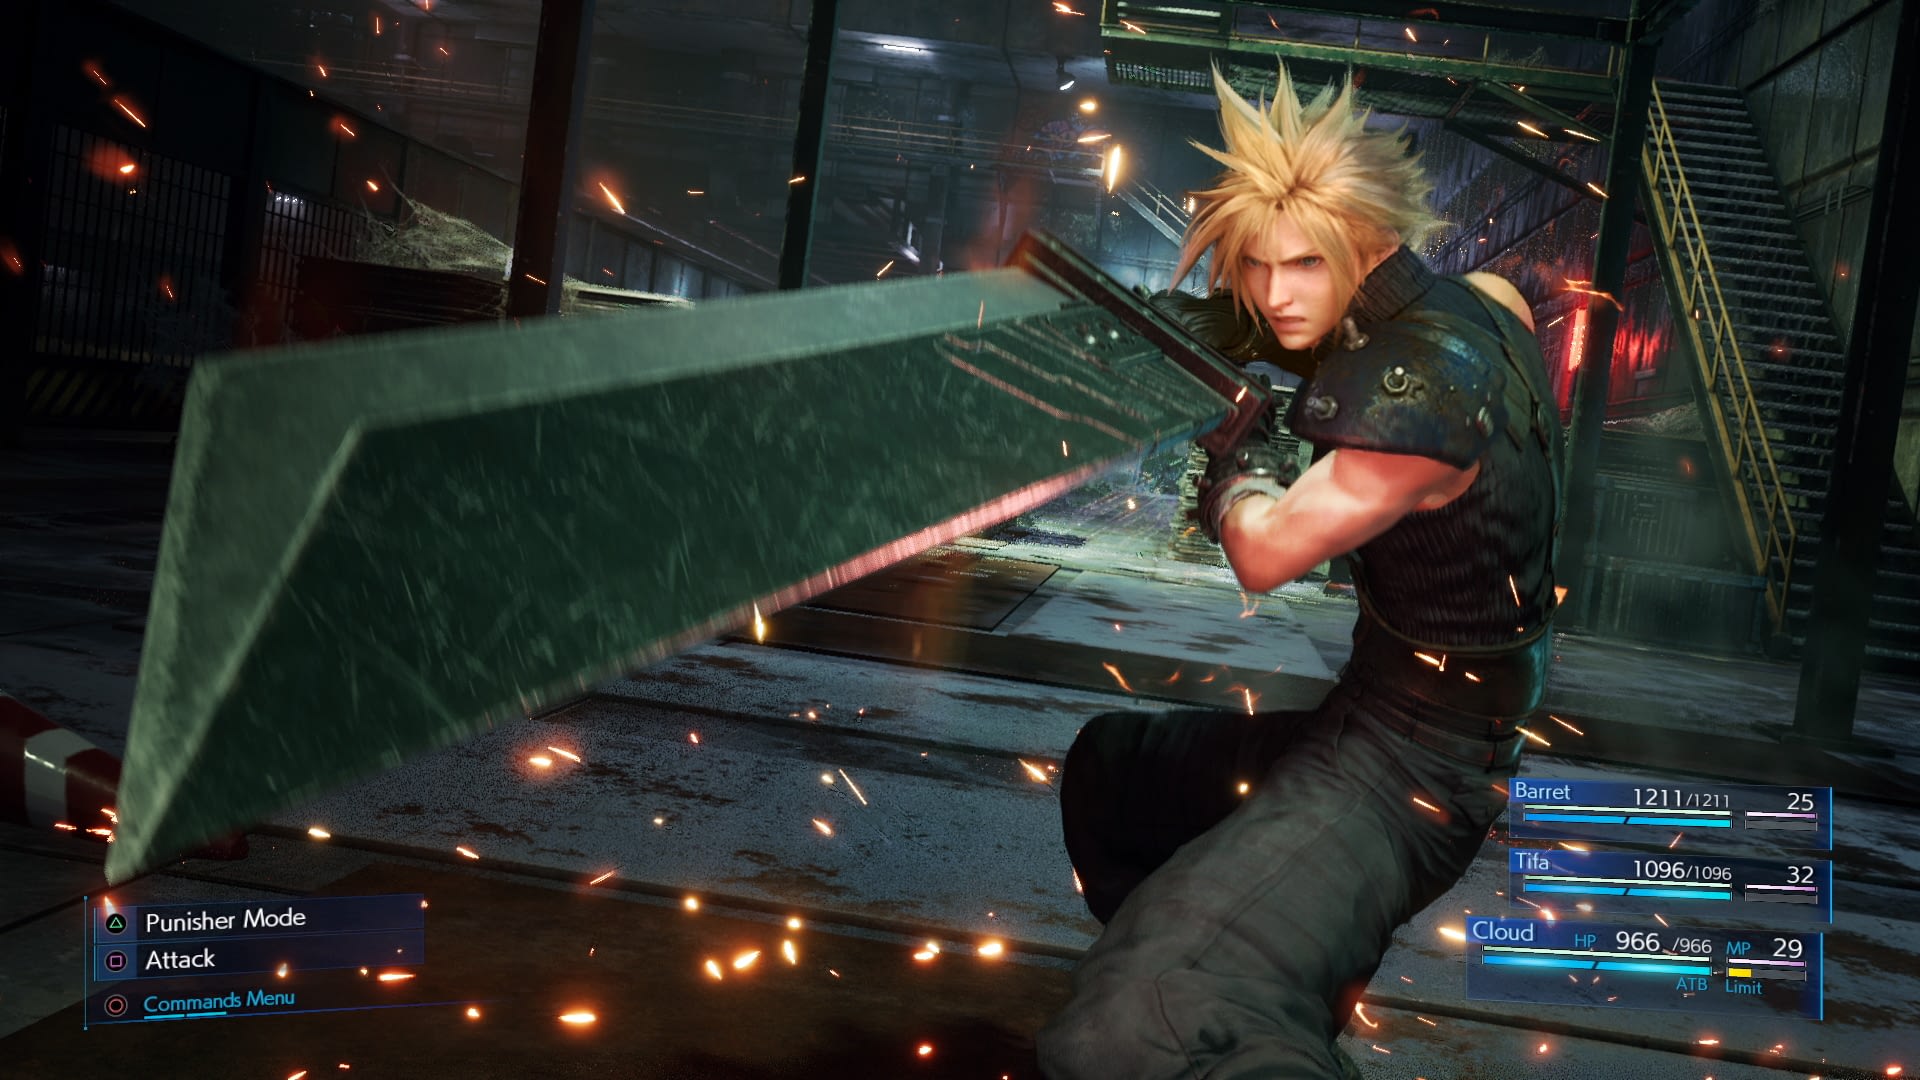 Cloud Strife Gets His Own "Final Fantasy VII Remake" Trailer